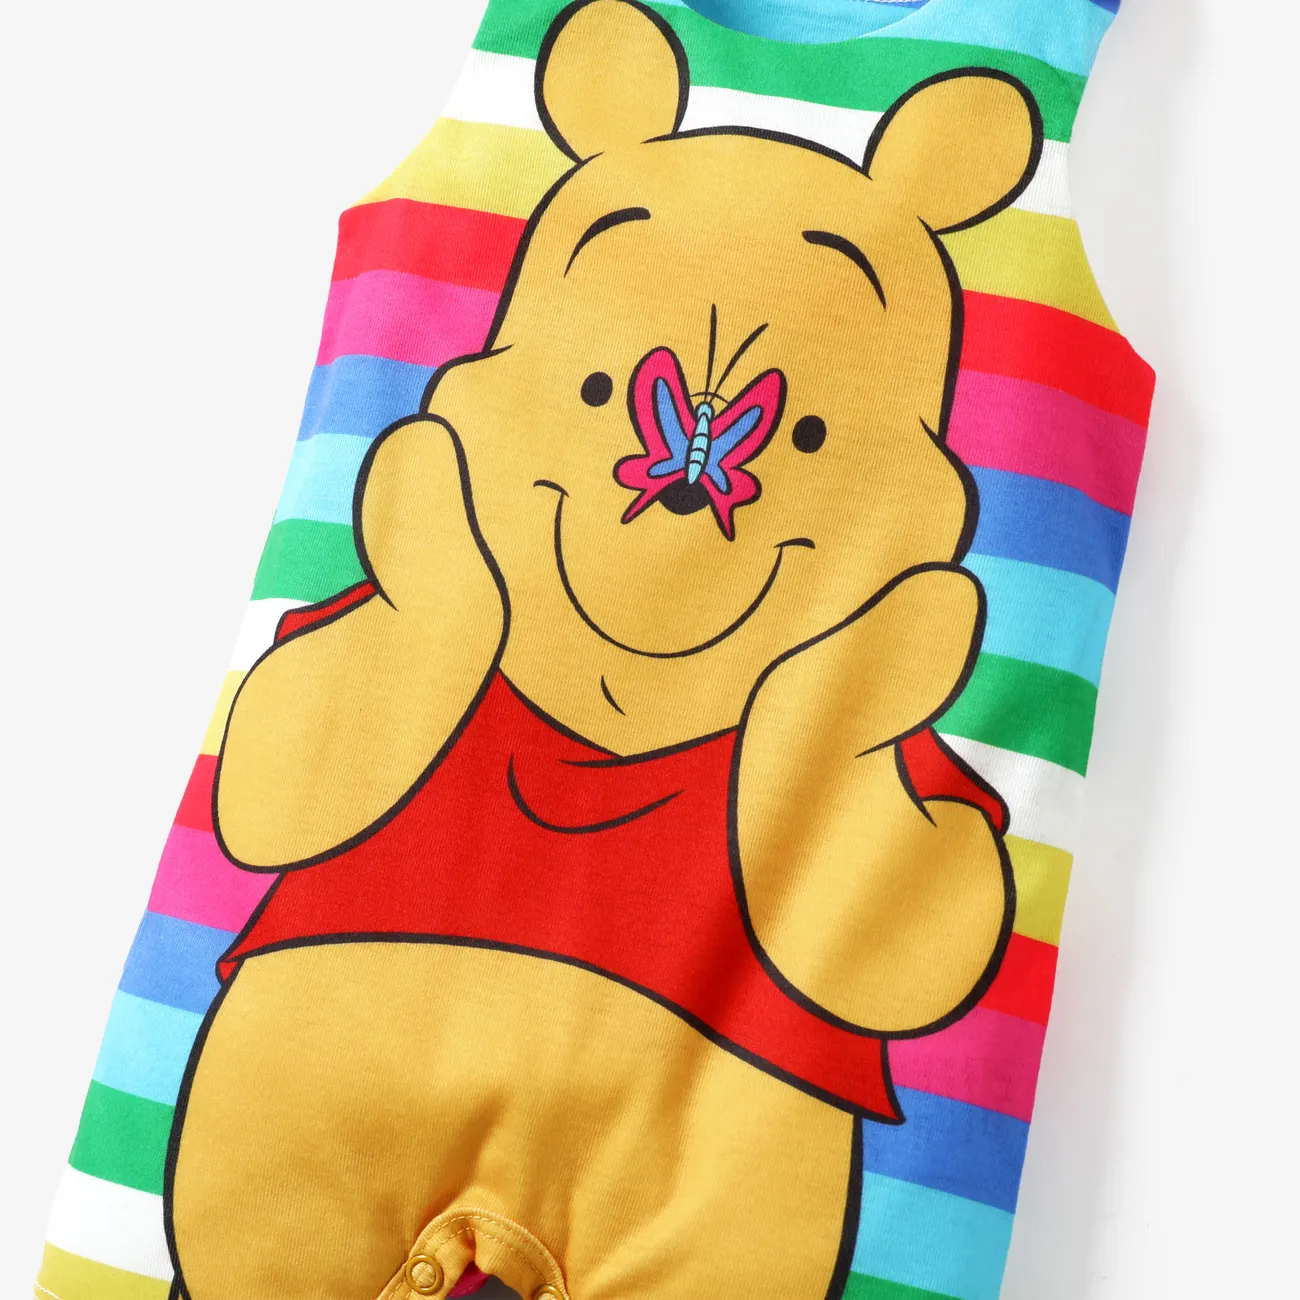 Disney Winnie the Pooh Baby Unisex Kindlich Ärmellos Strampler Mehrfarbig big image 1